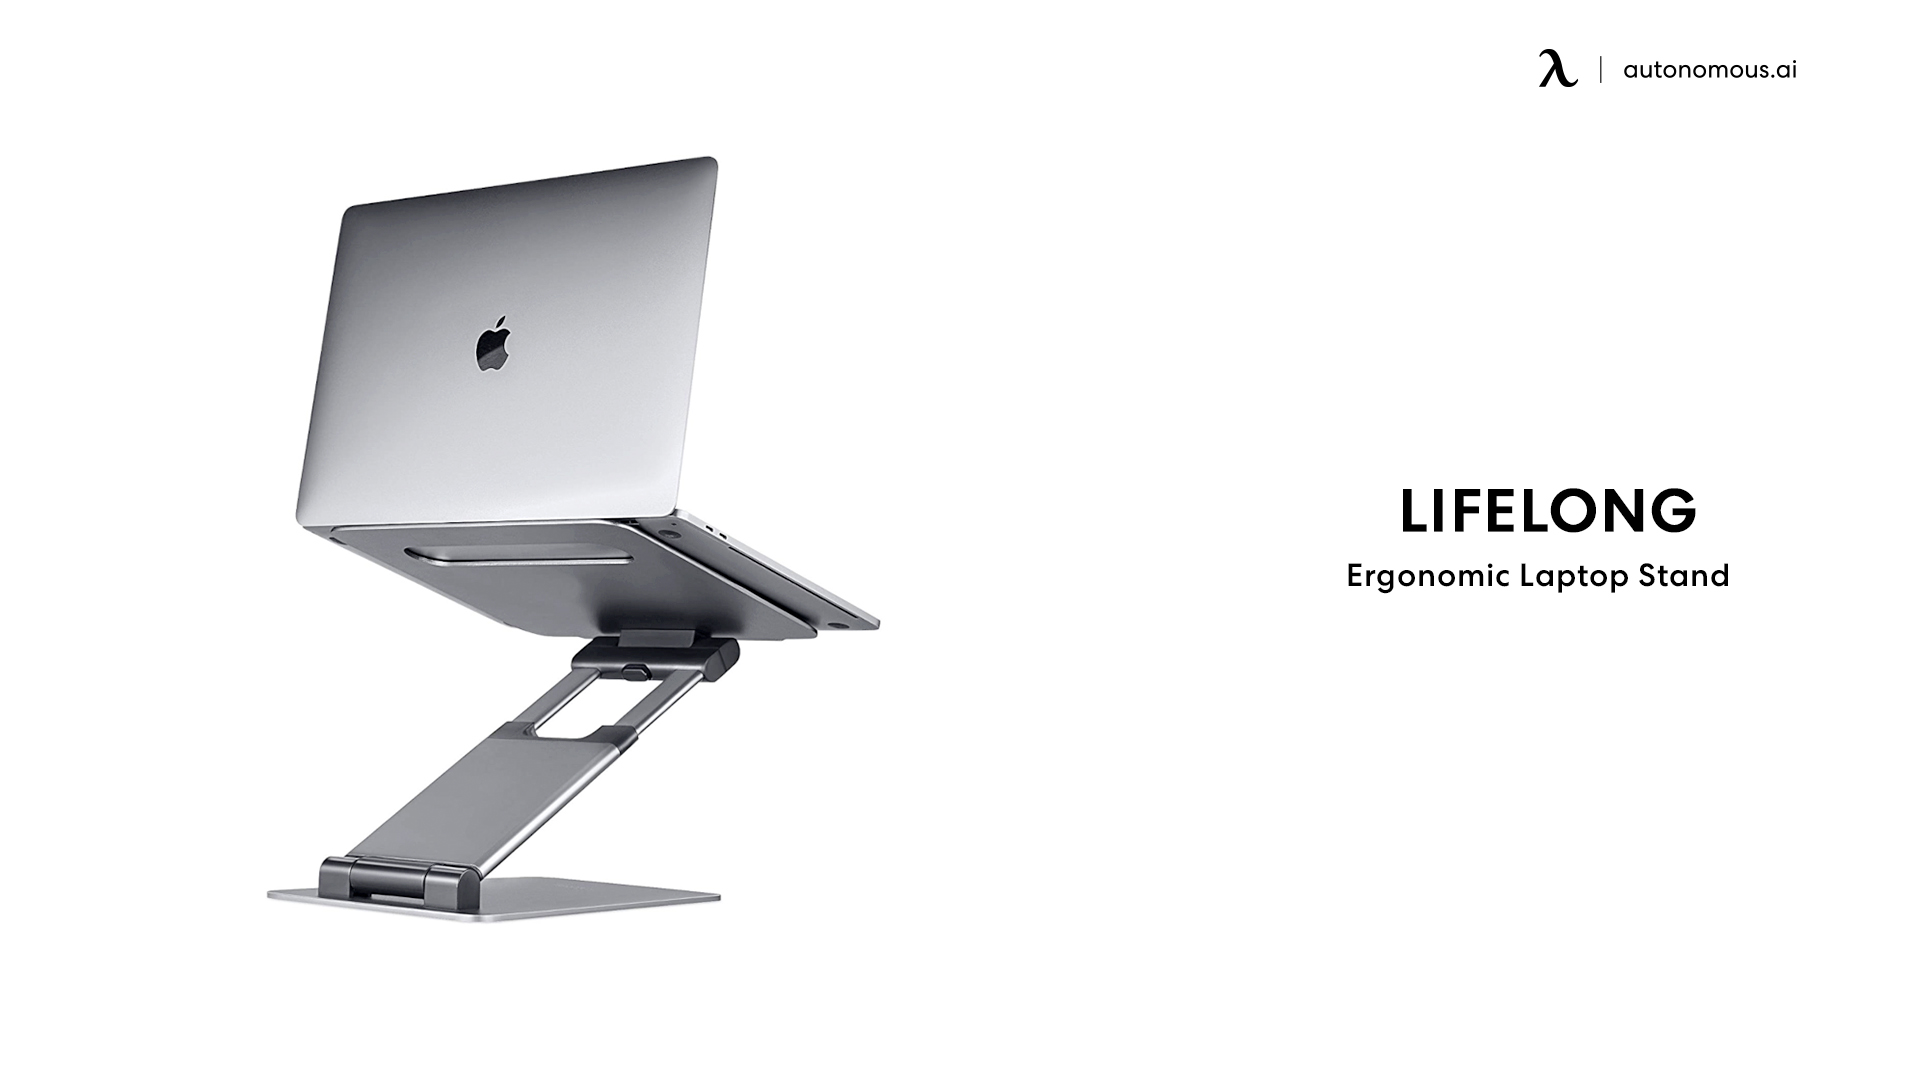 Lifelong Ergonomic Laptop Stand